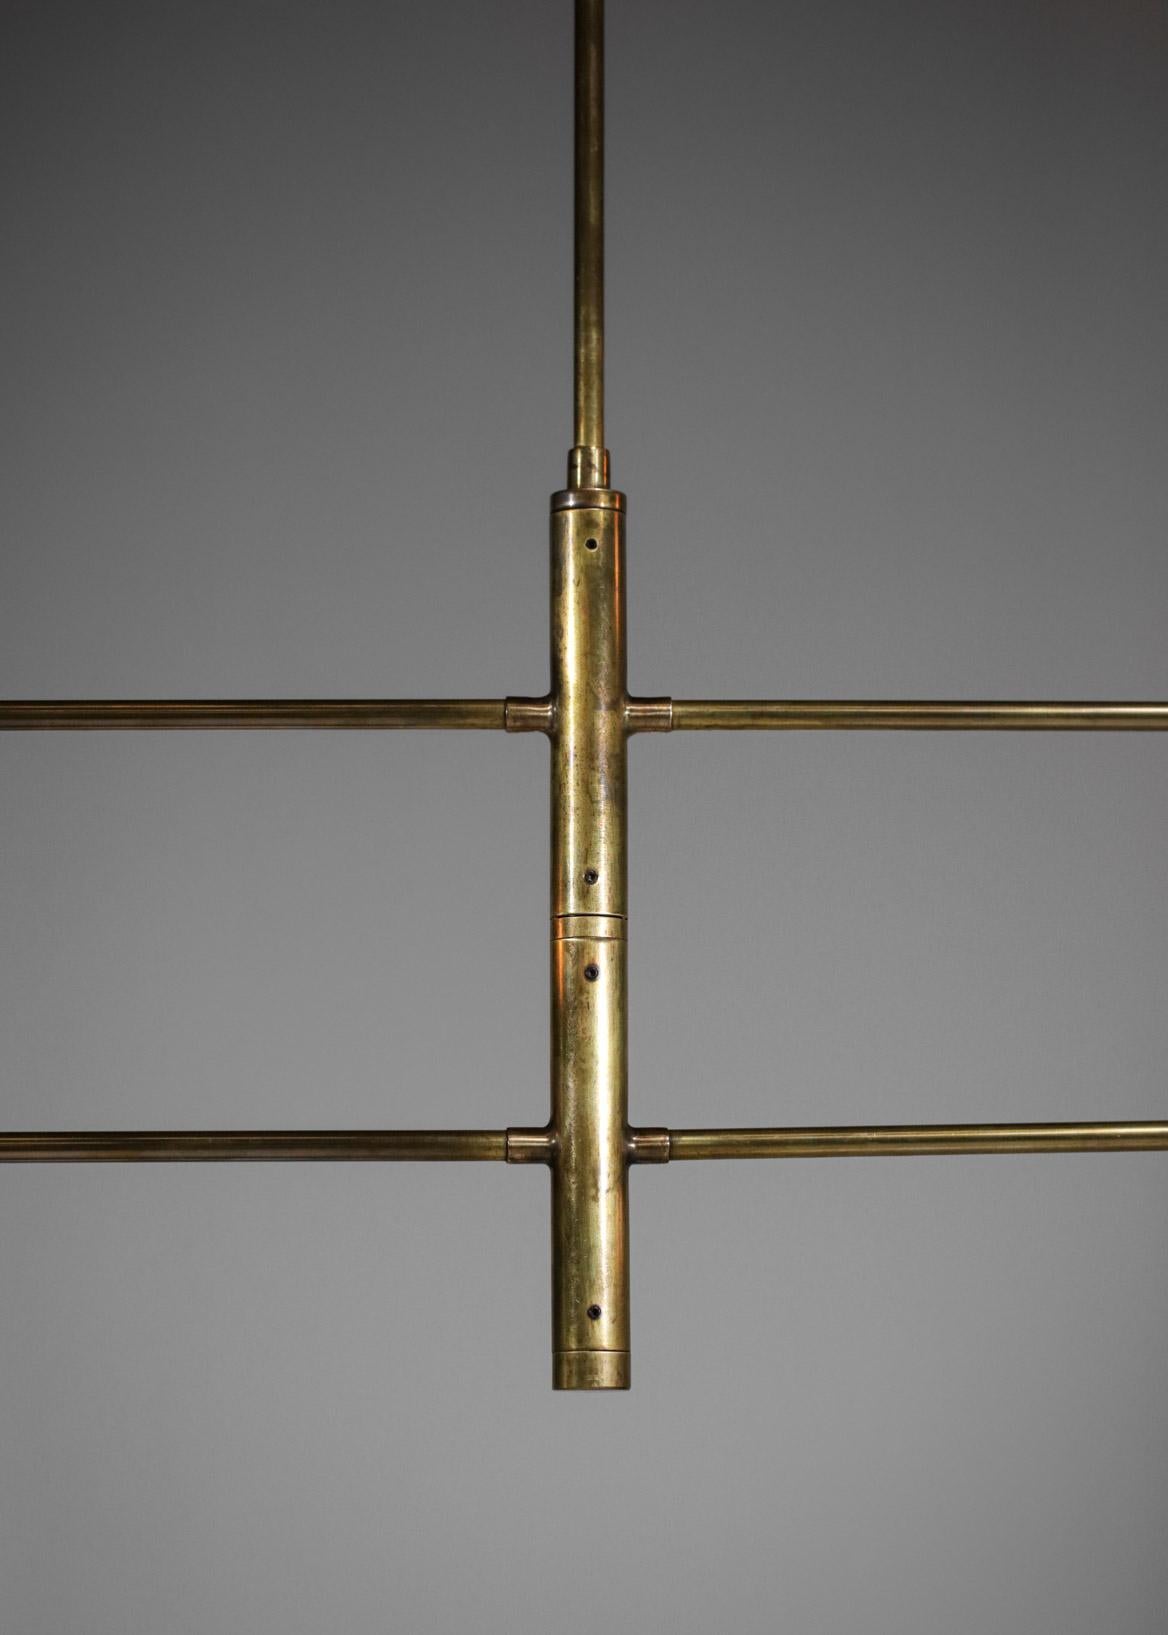 Metal Modern Italian Hanging Lamp Brass Pendulum, Vintage Stilnovo Design Giroue F142 For Sale